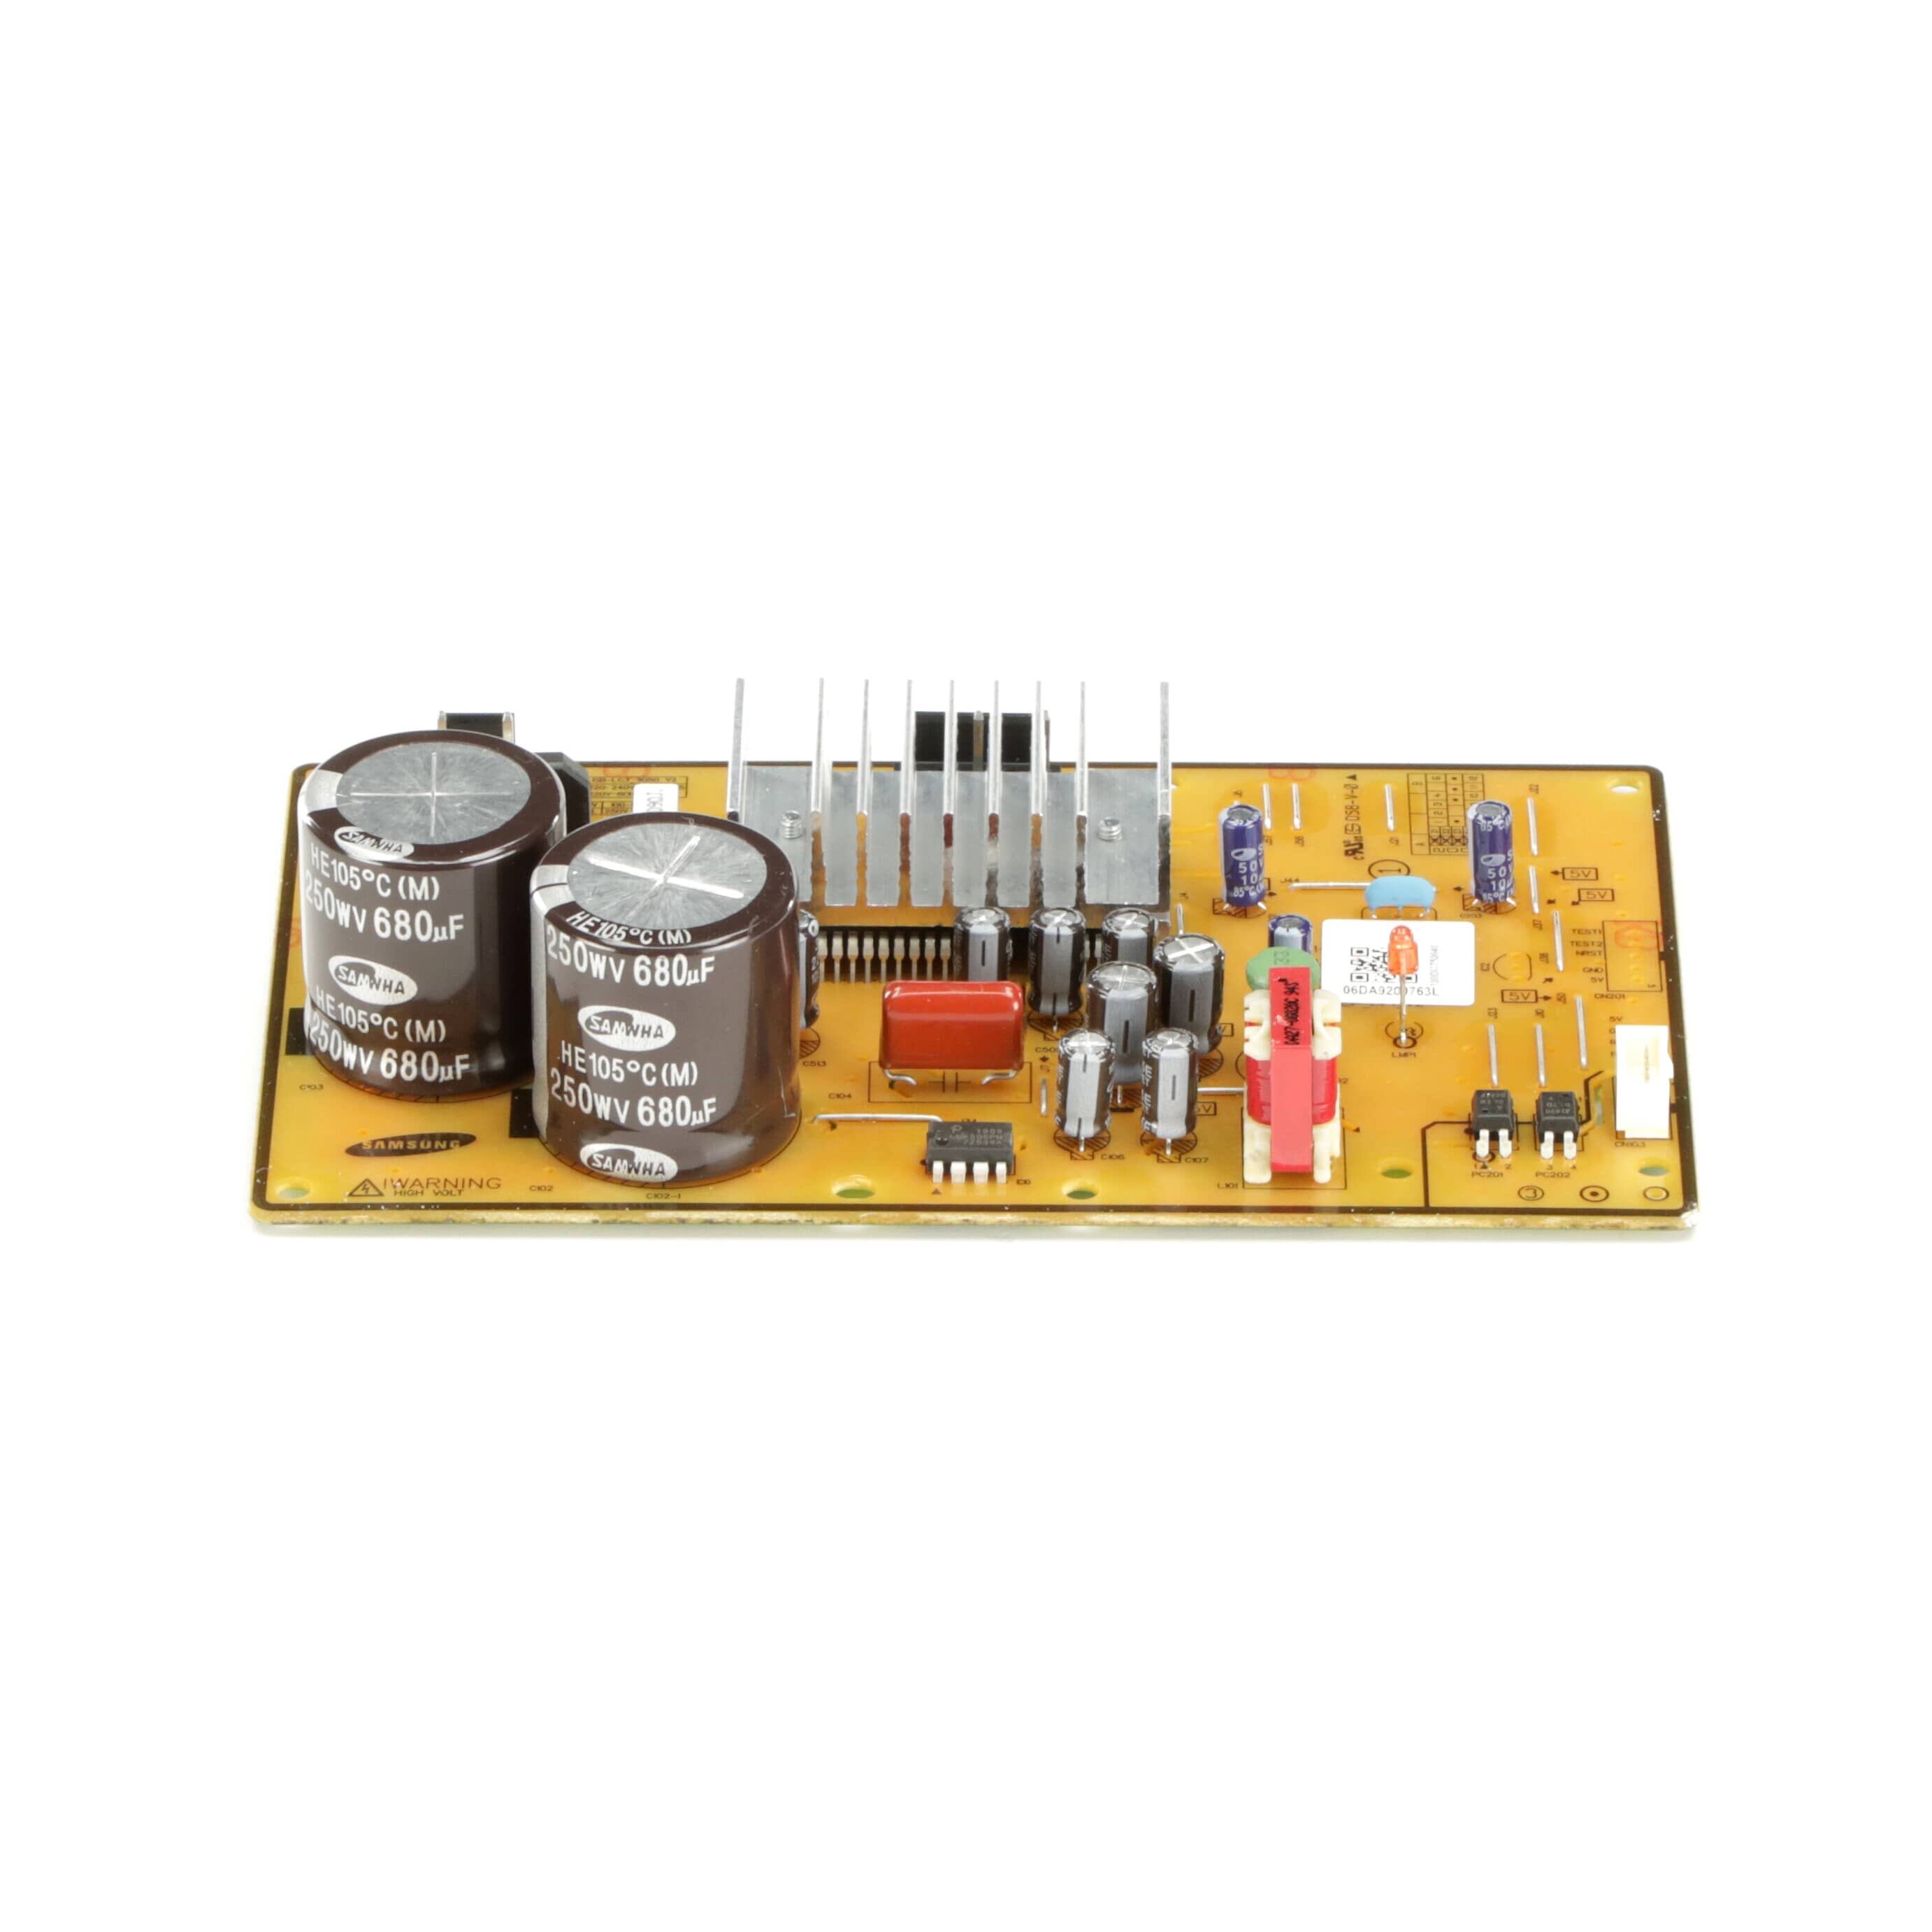 DA92-00763L PCB Inverter Assembly